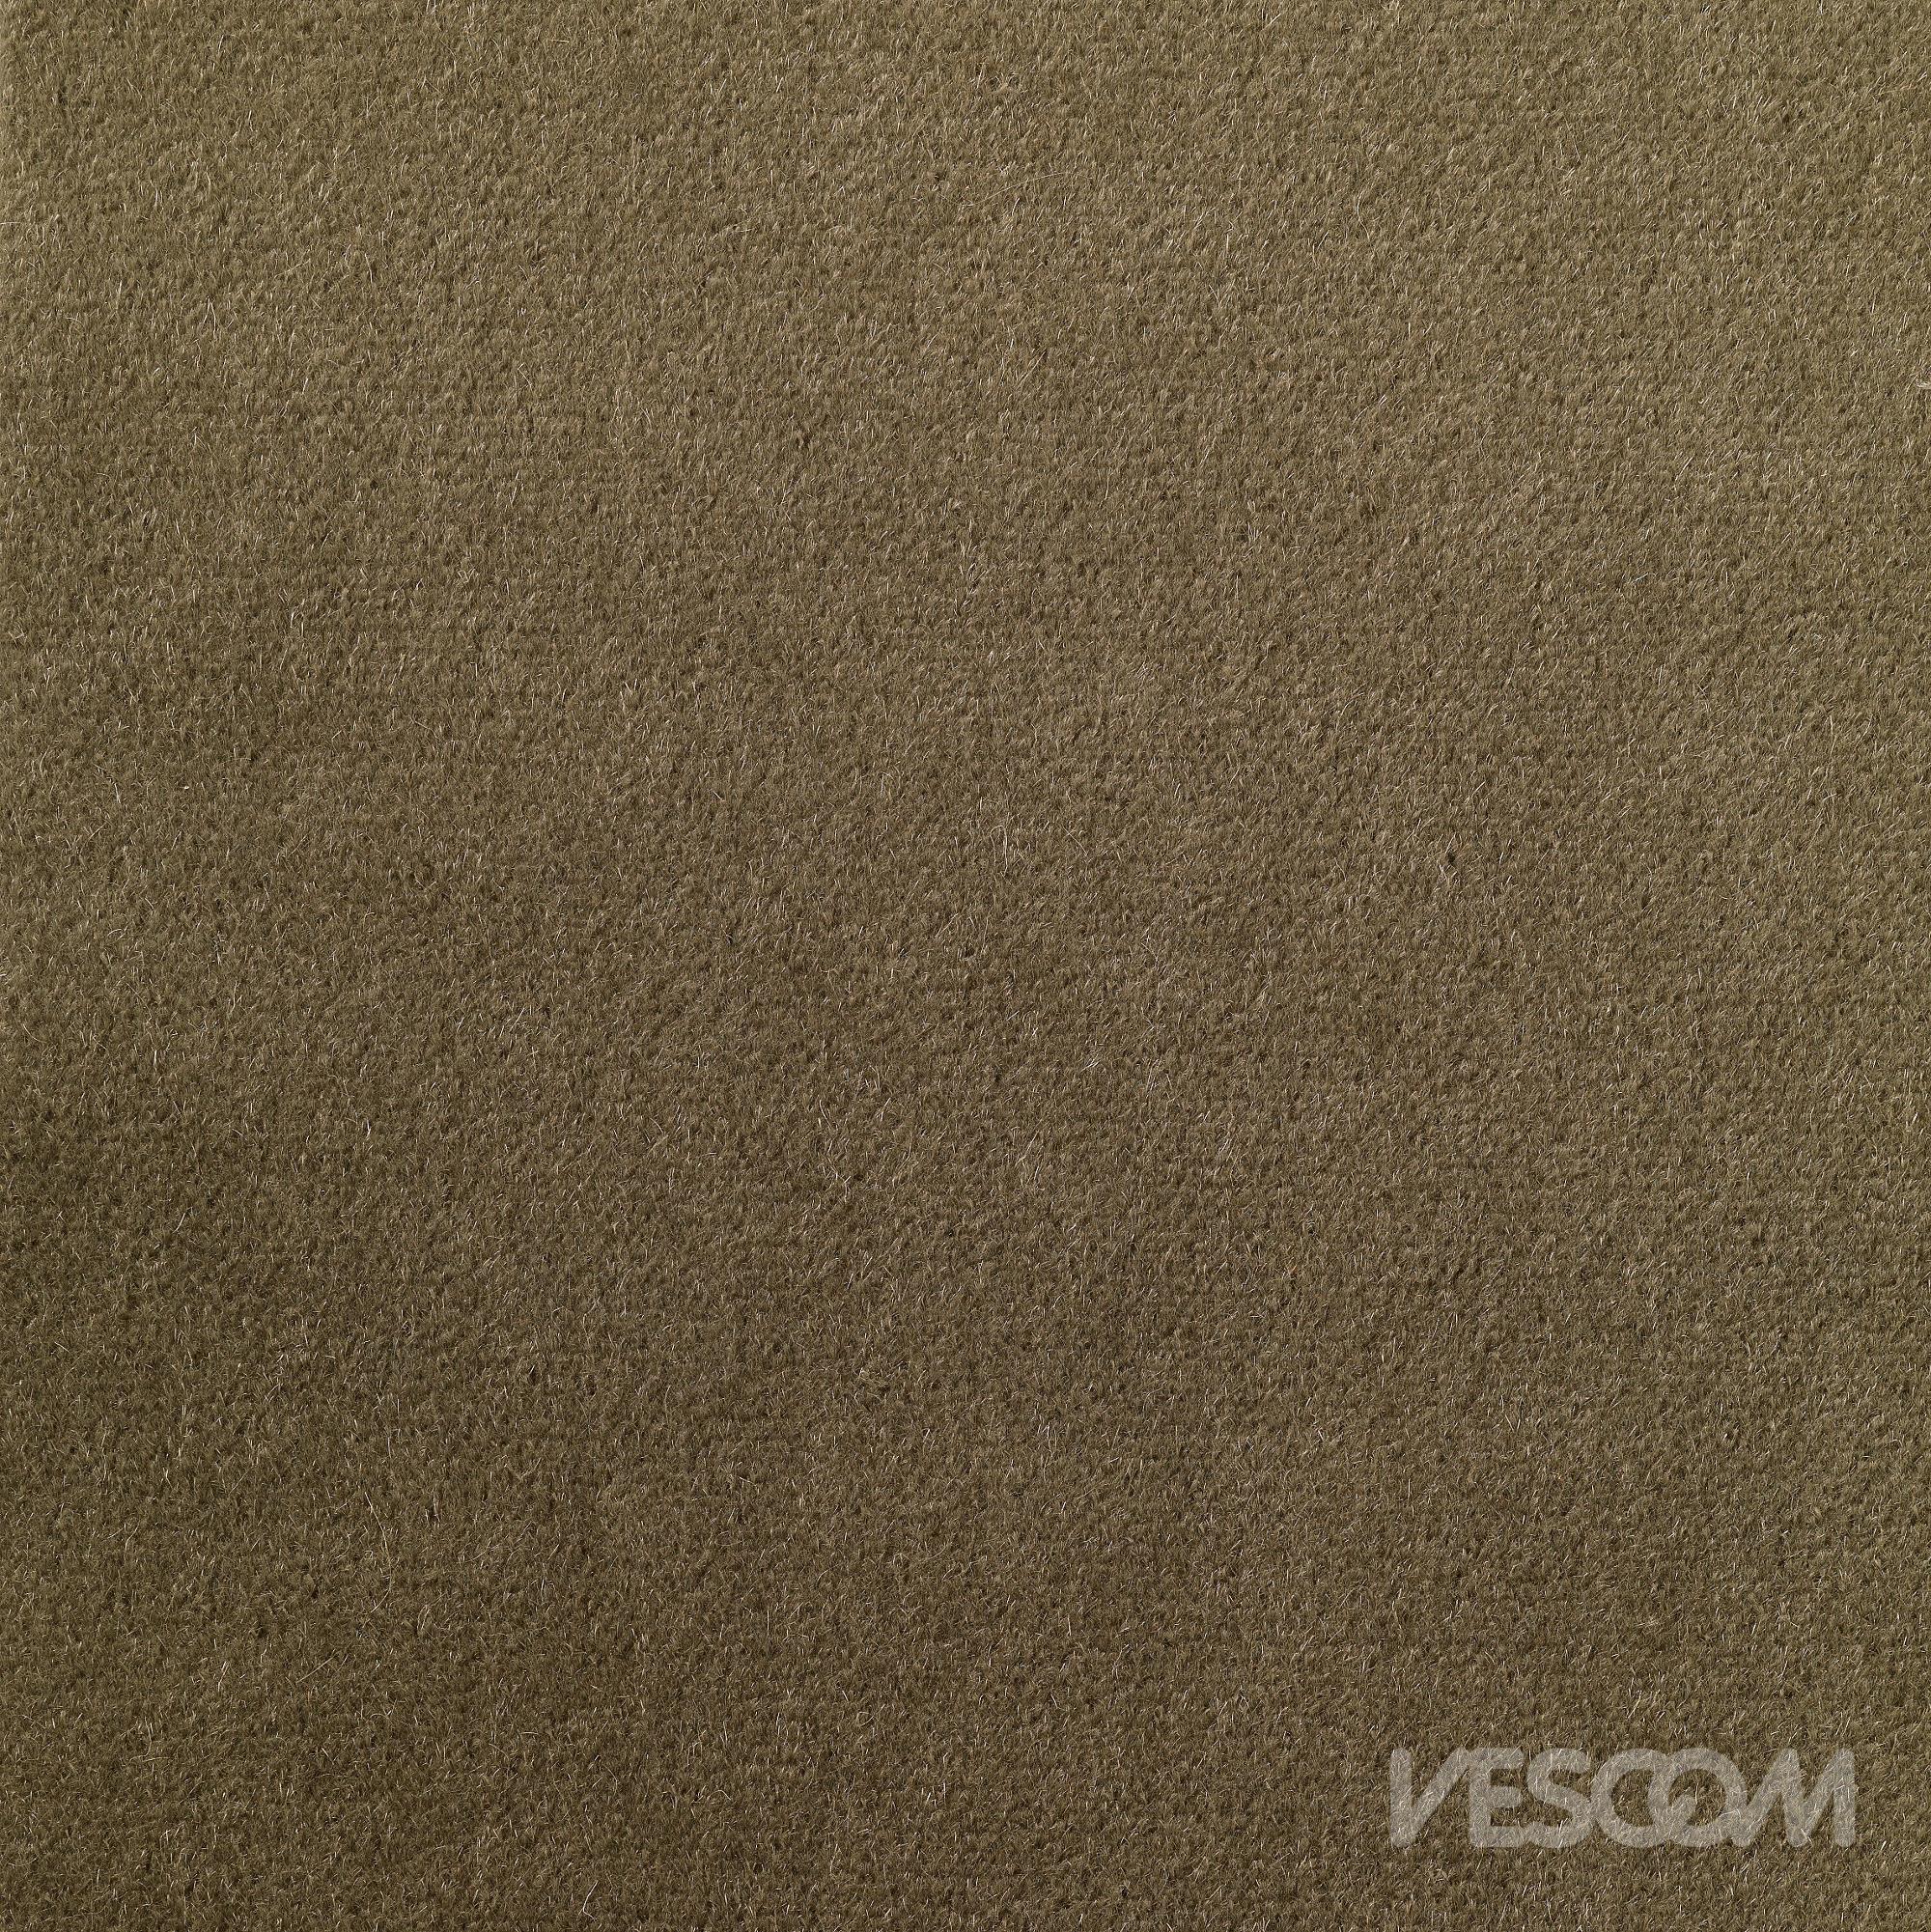 Vescom Ariana Upholstery Fabric 7061.16